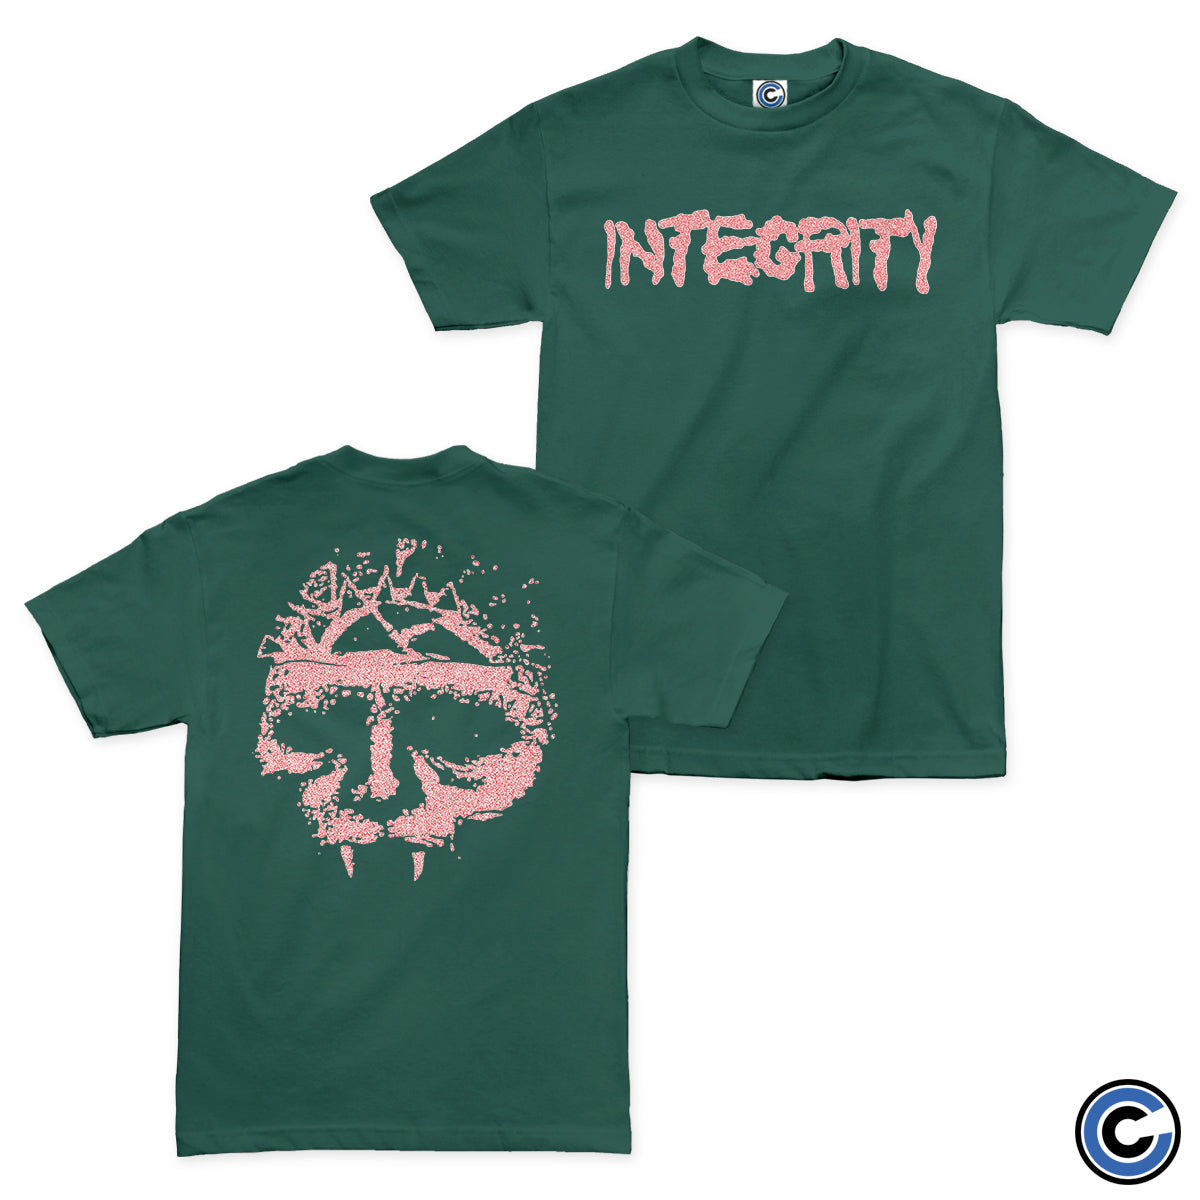 Integrity "Blotchy" Shirt